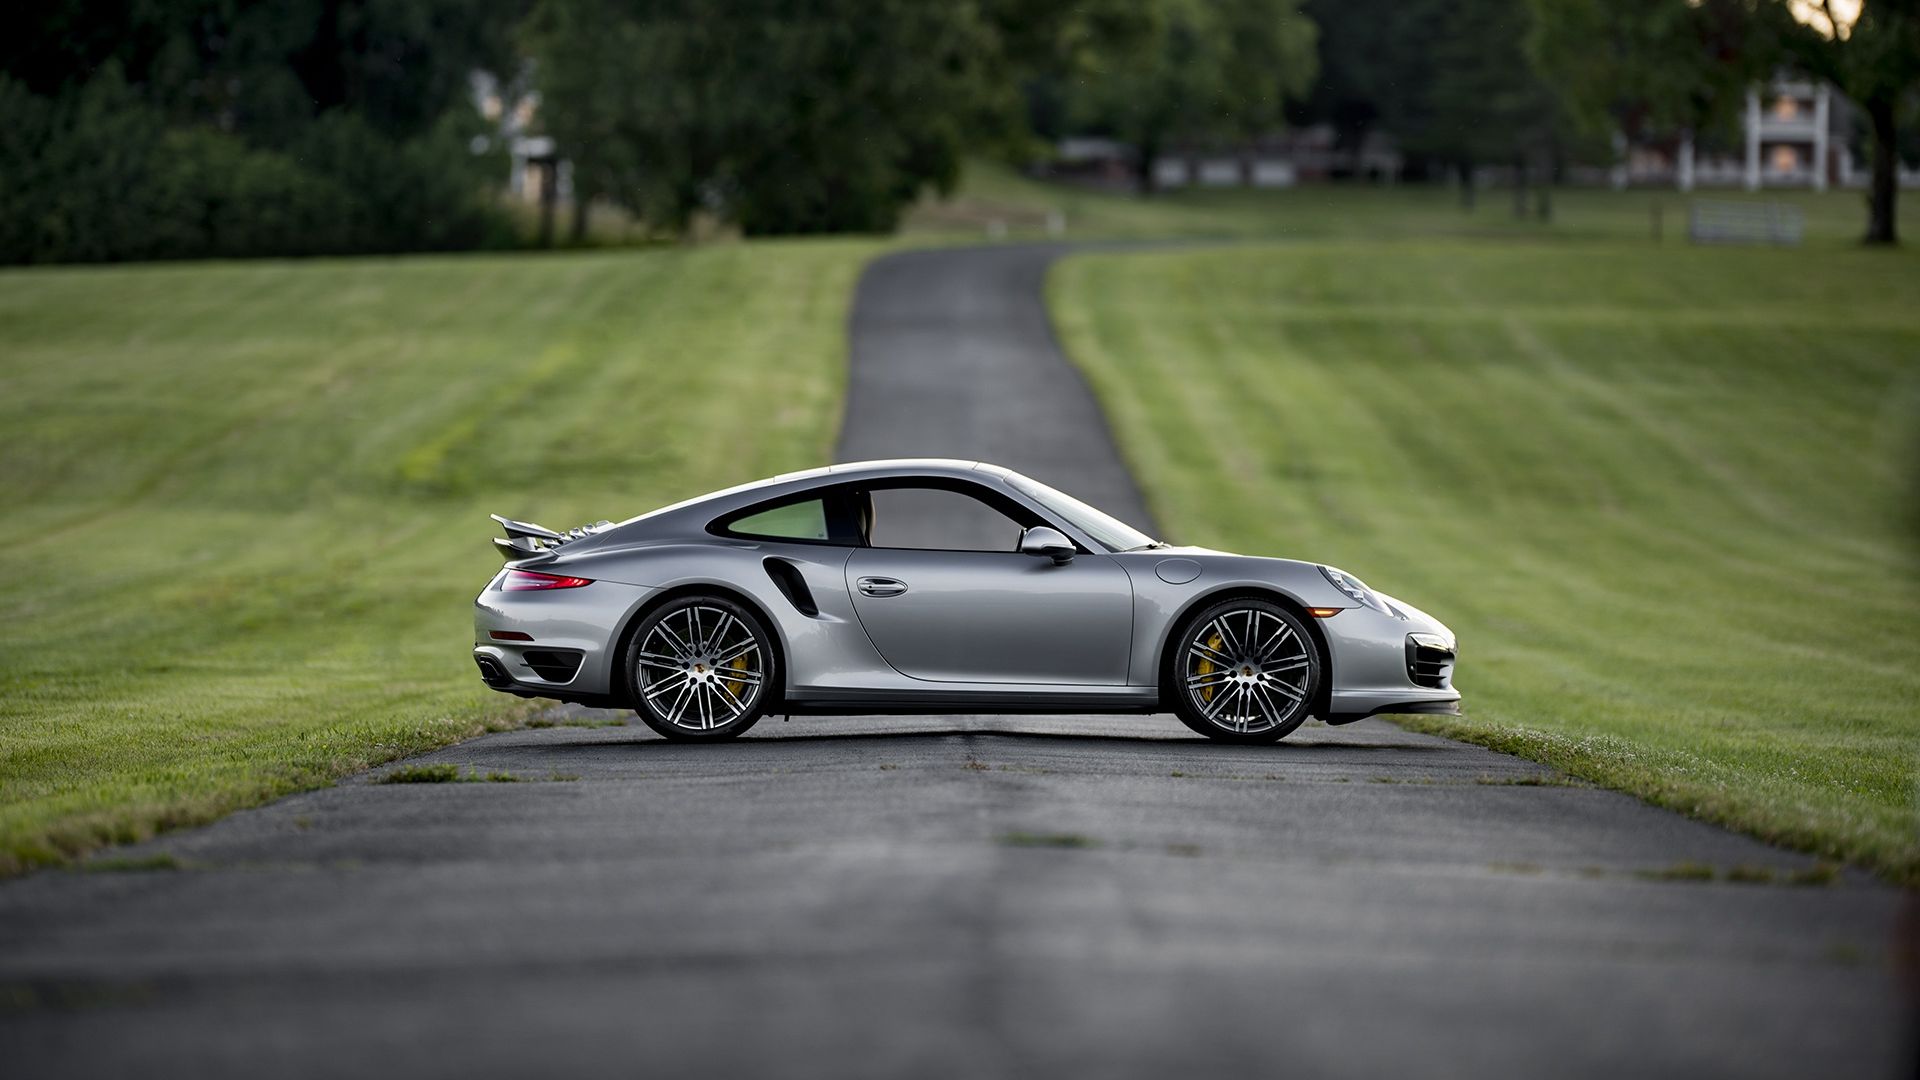 Wallpaper Porsche 911 Turbo, sliver sports car, side view, road